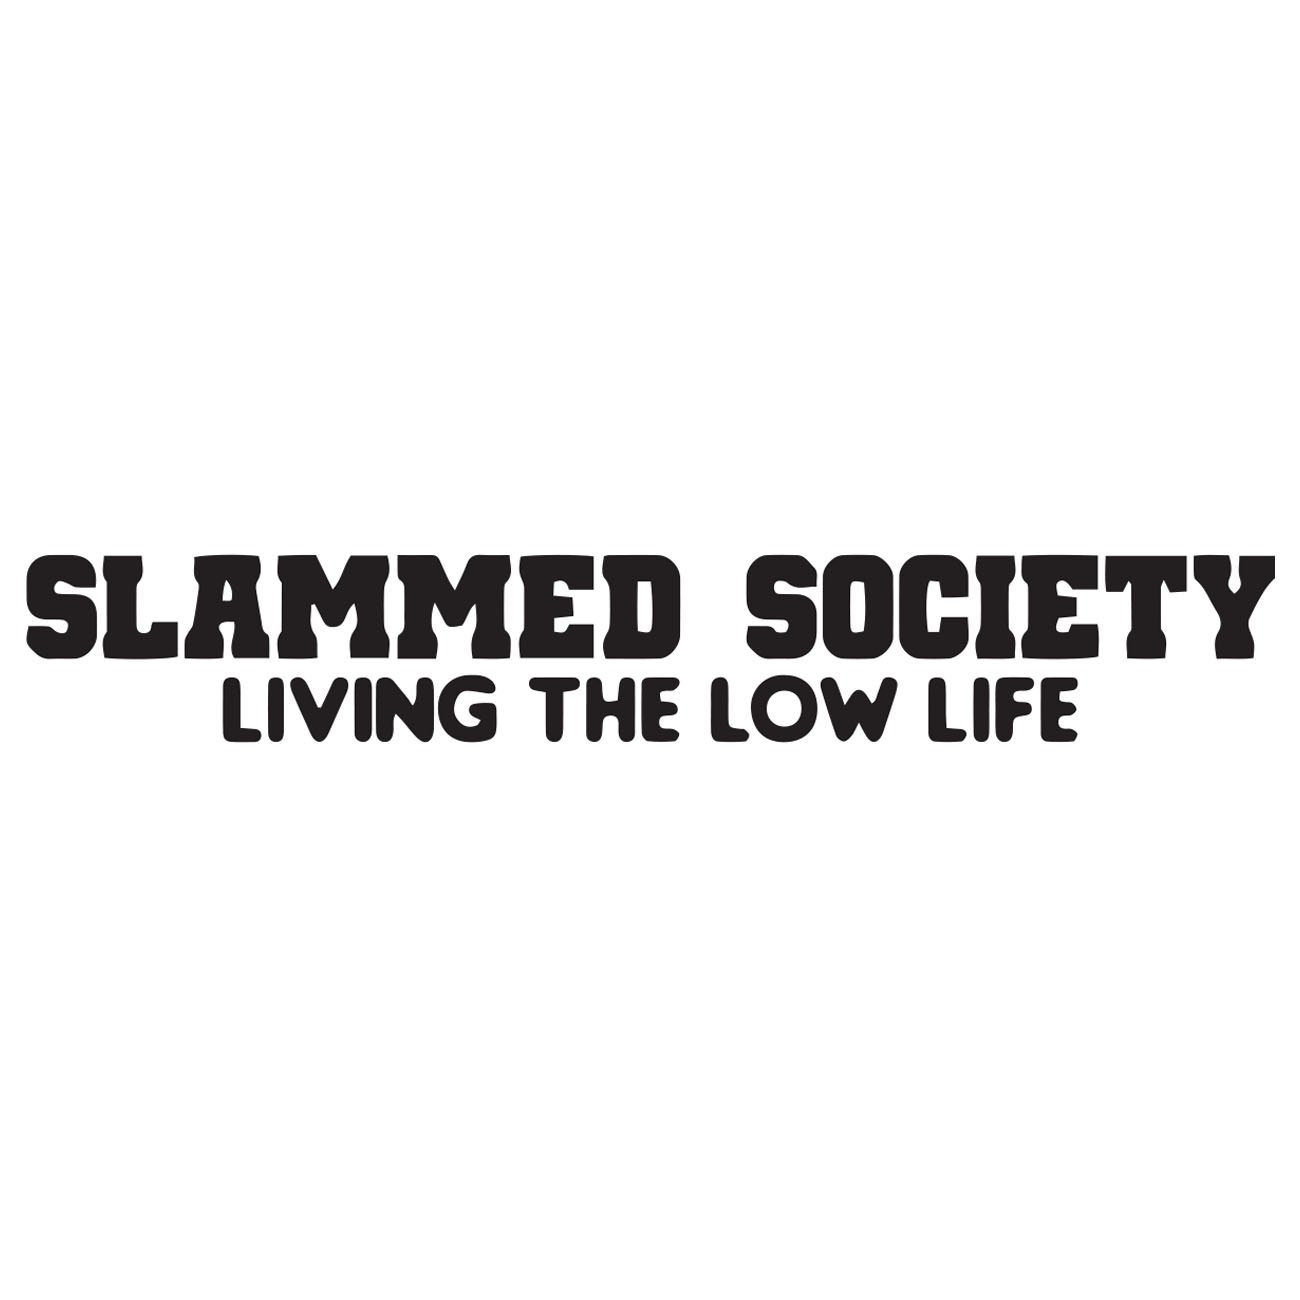 Slammed Society 1 - Living the low life